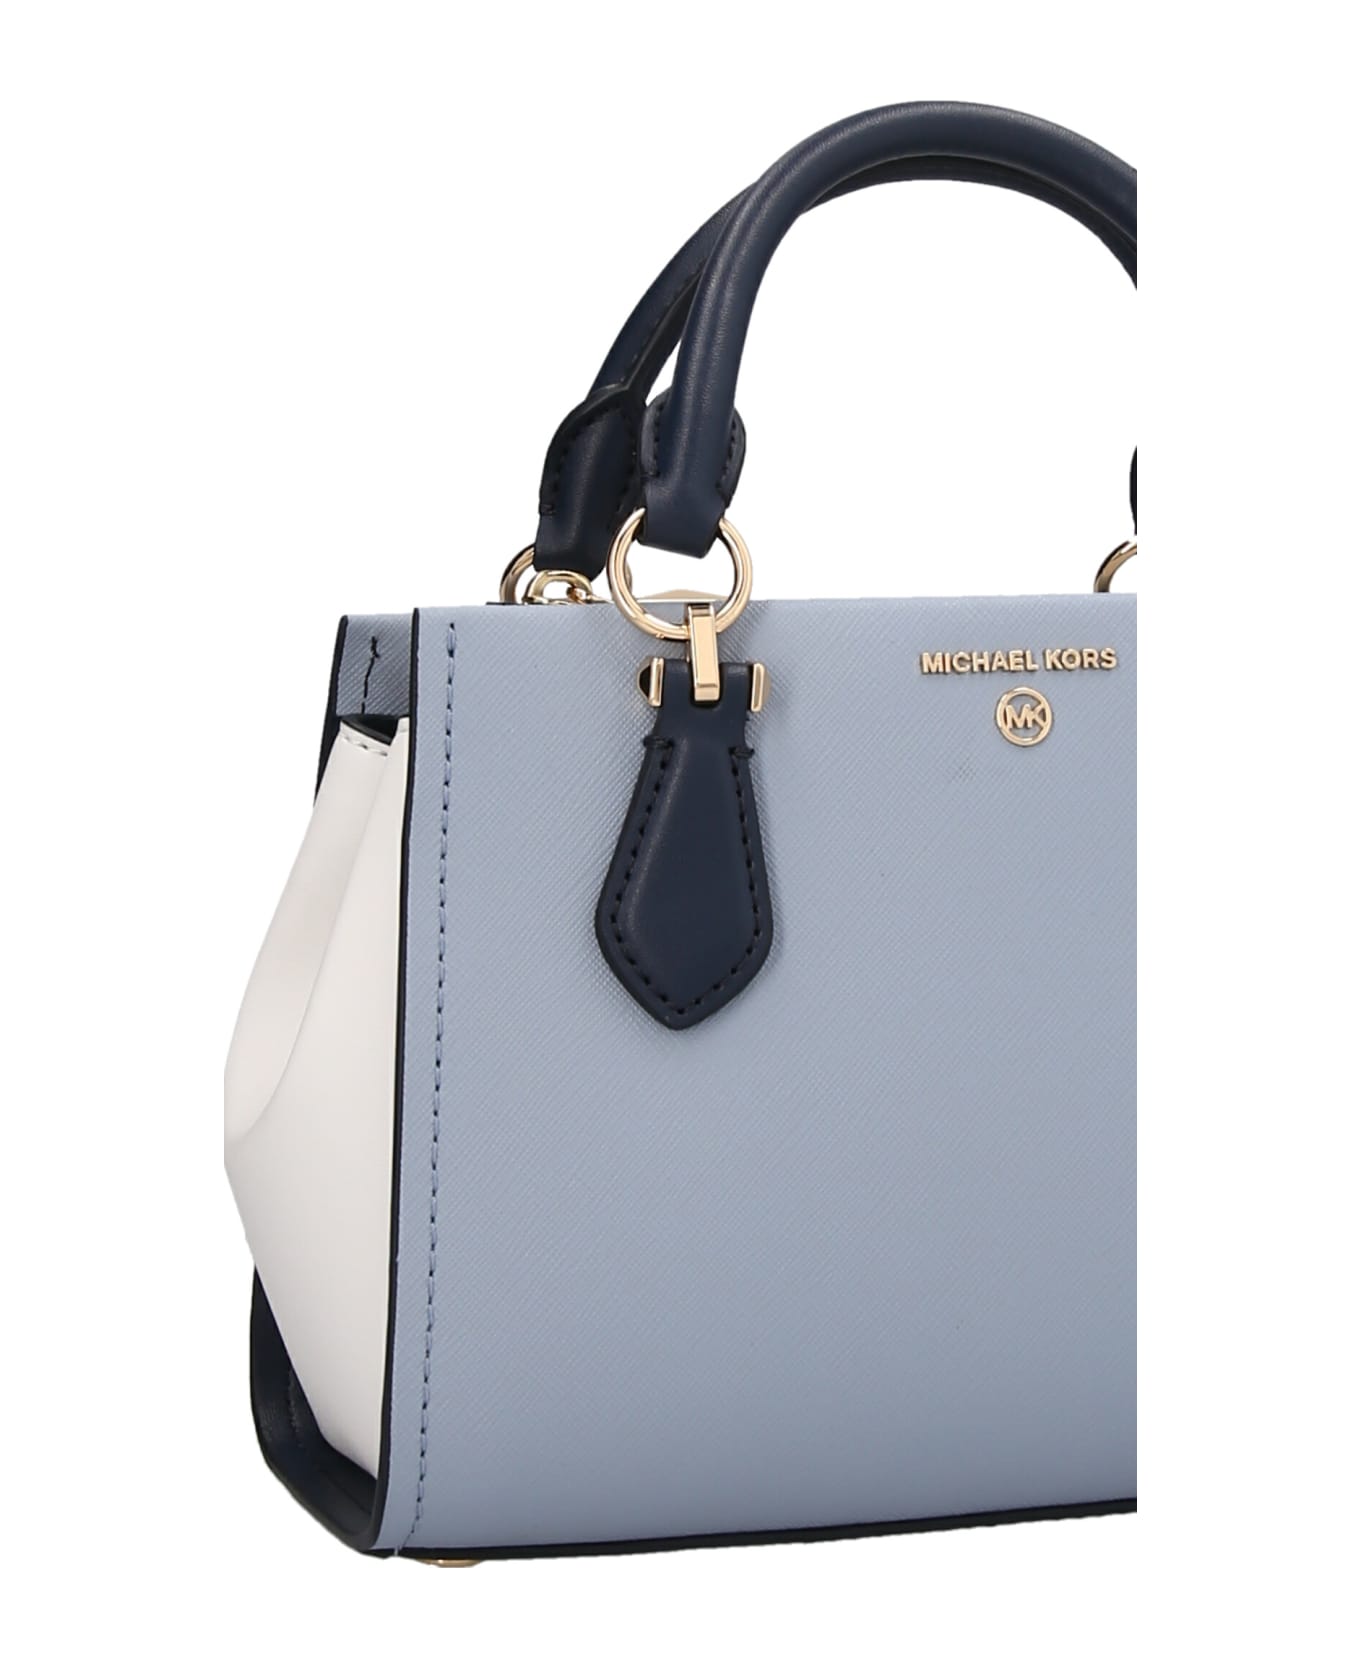 Michael Kors '18k Smooth Nappa' Handbag - Light Blue